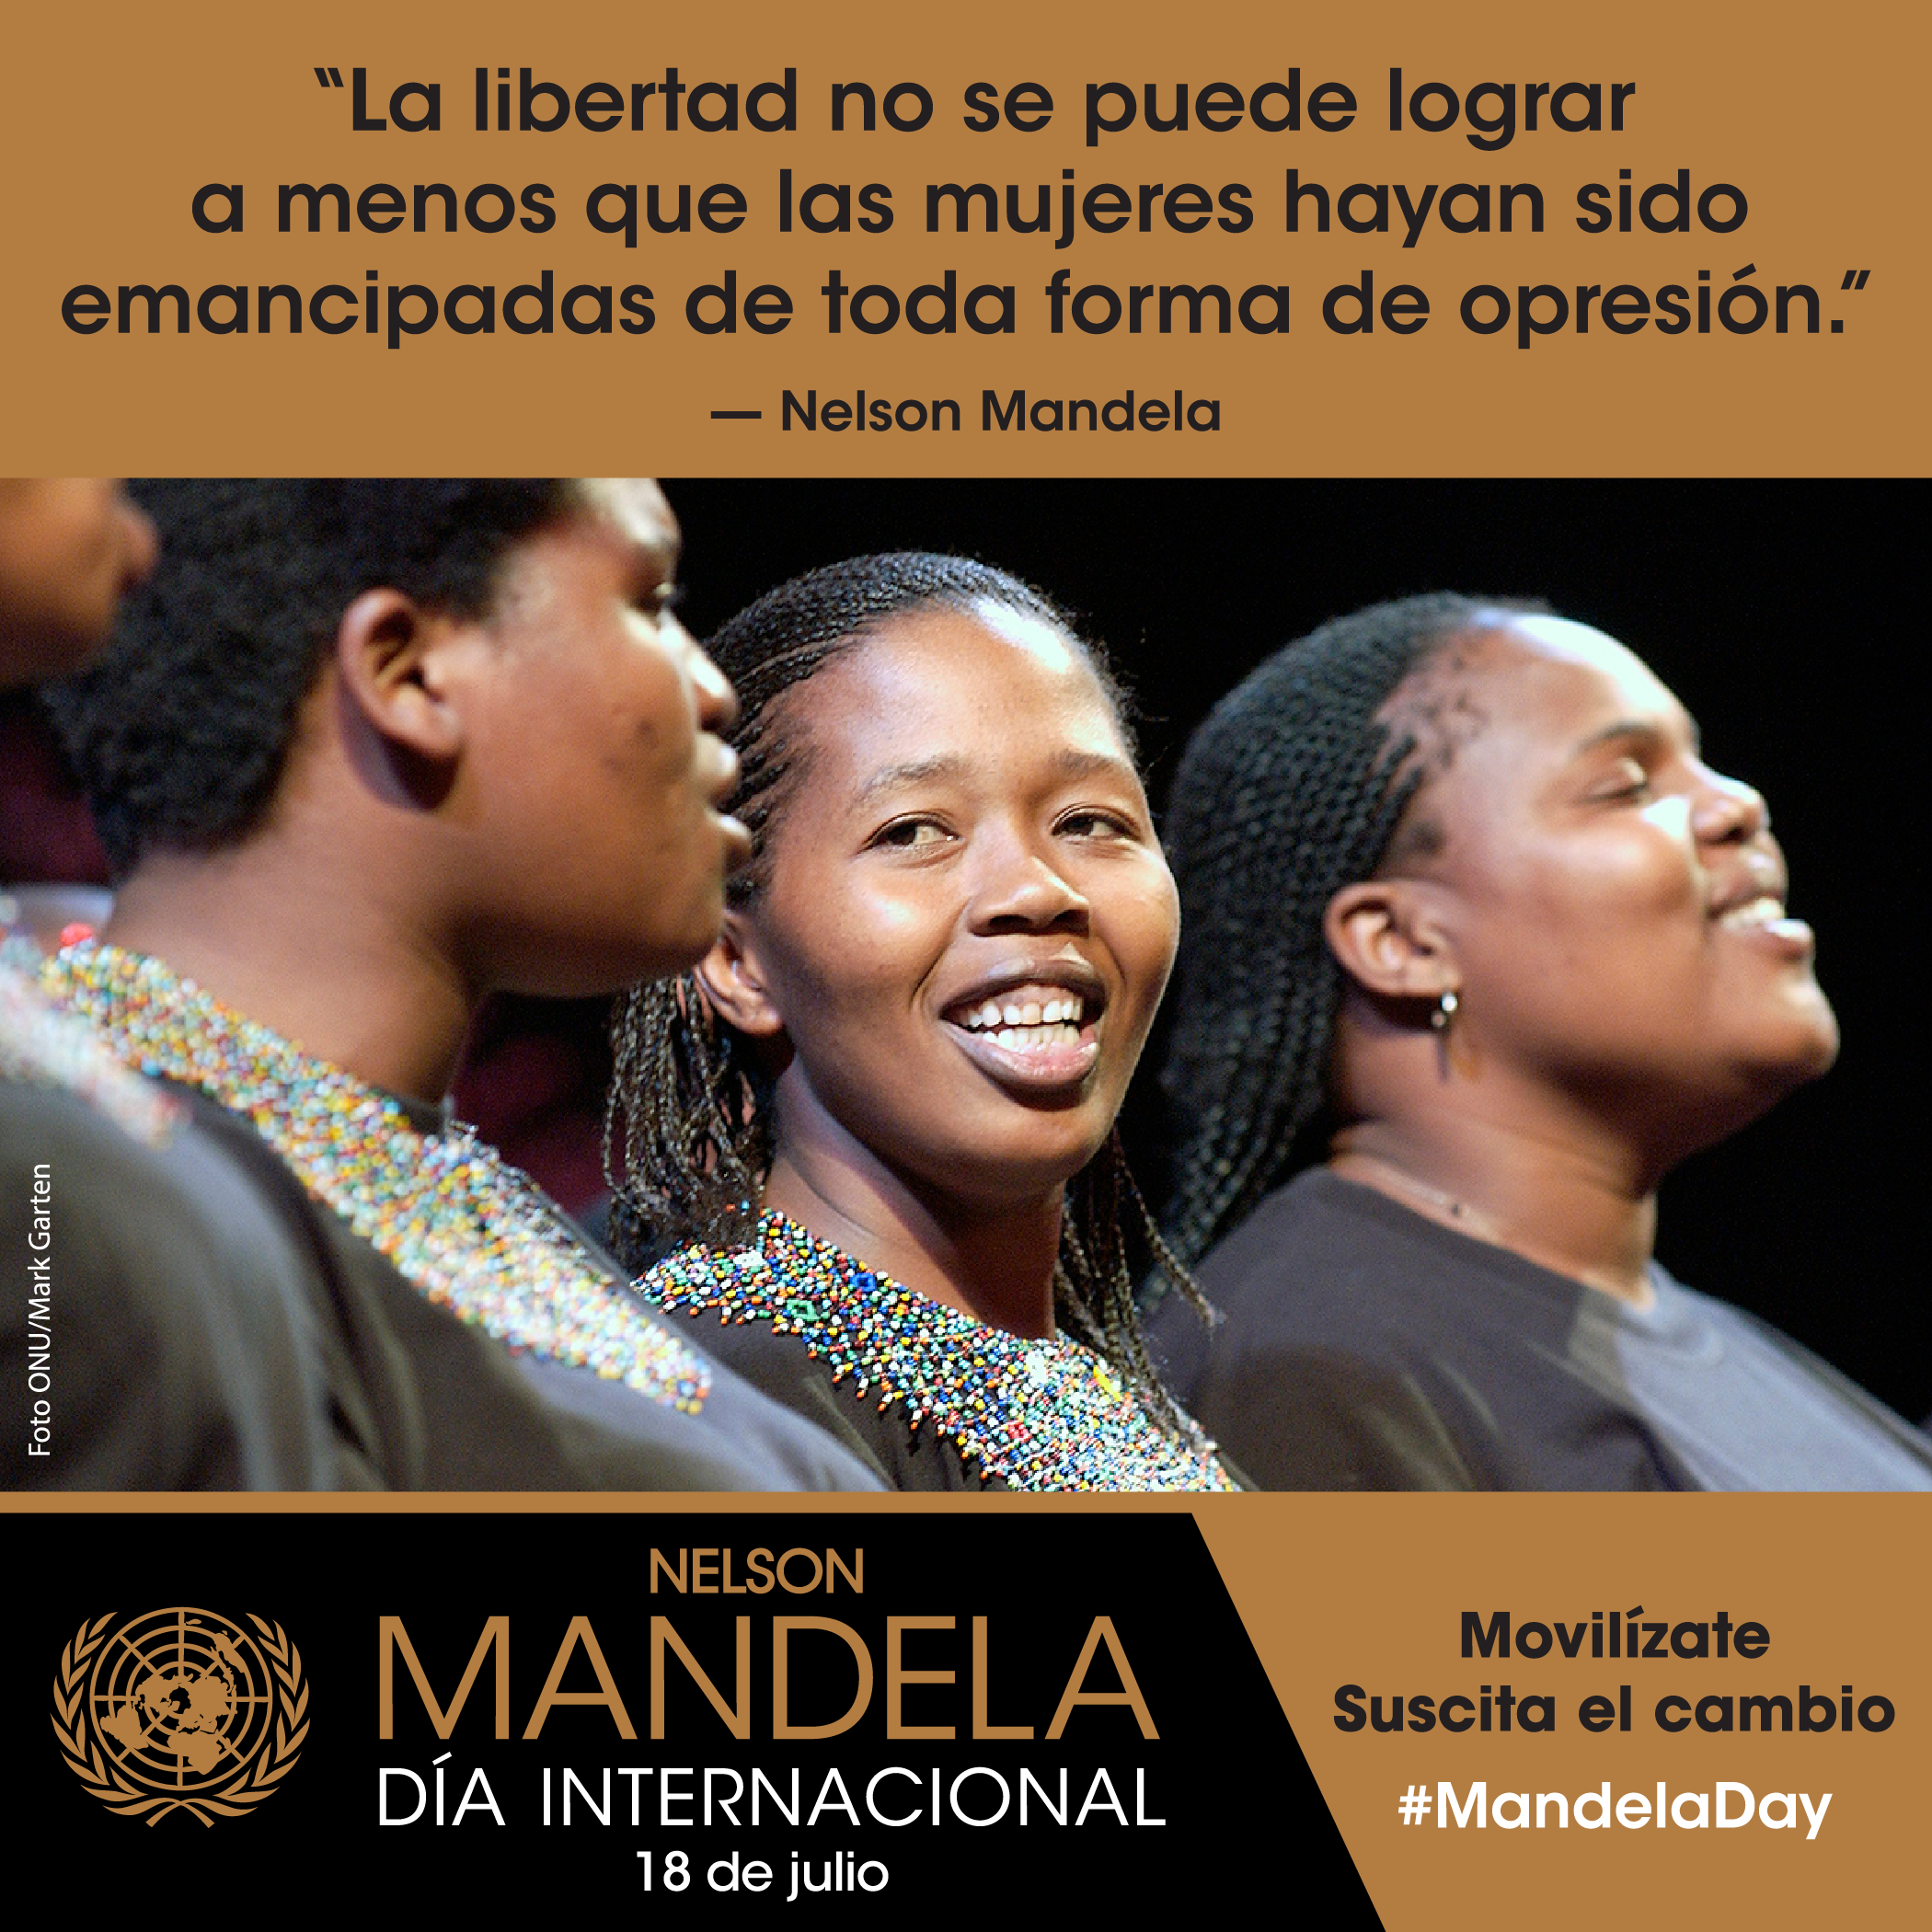  Día Internacional de Nelson Mandela, 18 de julio  Nelson_Mandela_Day_2019_women-SP